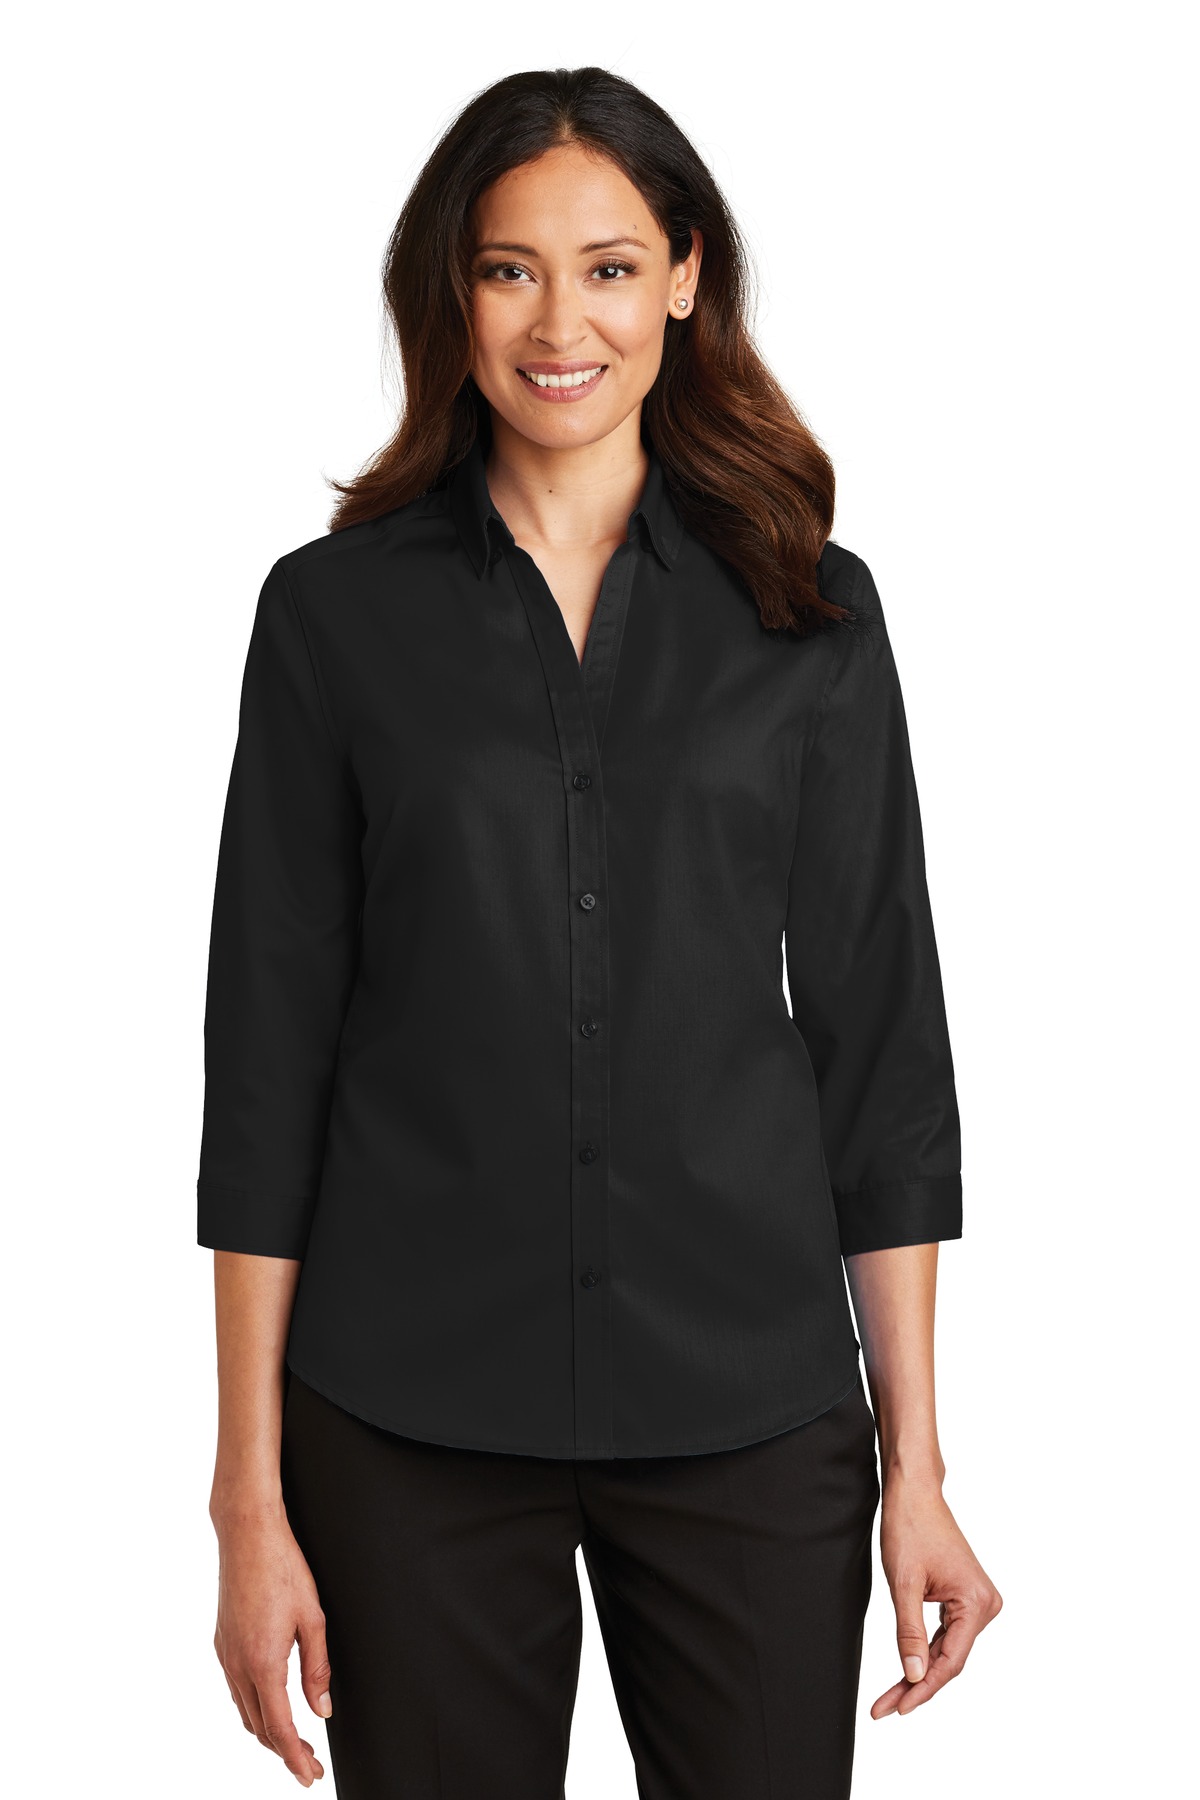 Port Authority Ladies Woven Shirts for Hospitality- ® Ladies 3/4-Sleeve SuperPro Twill Shirt.-Port Authority